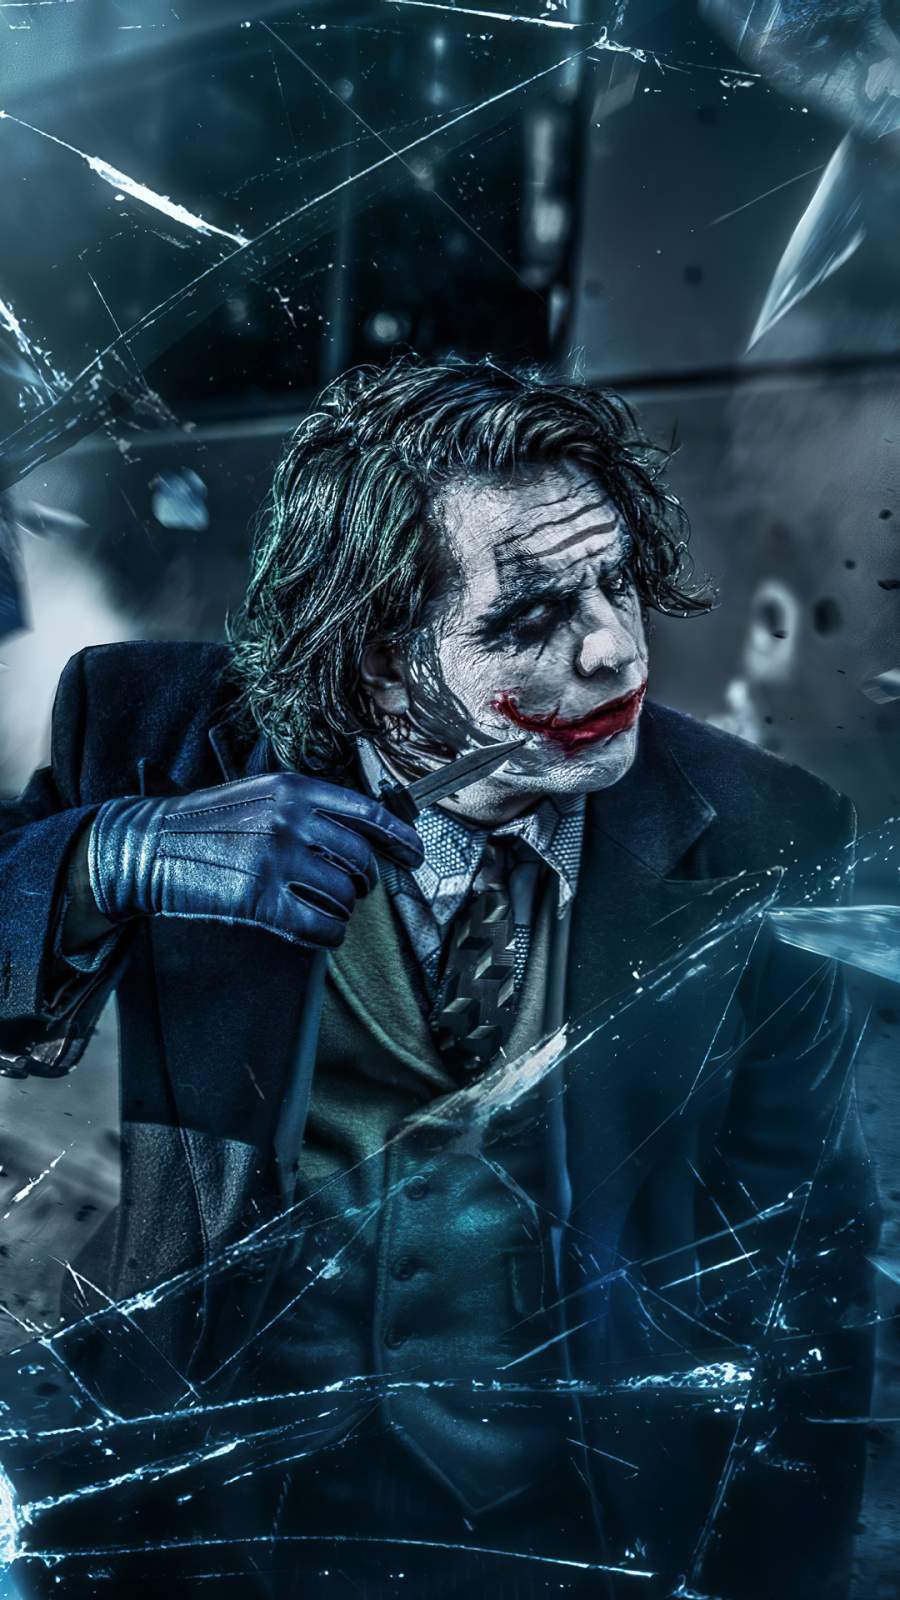 Joker with Knife iPhone Wallpaper Wallpaper, iPhone